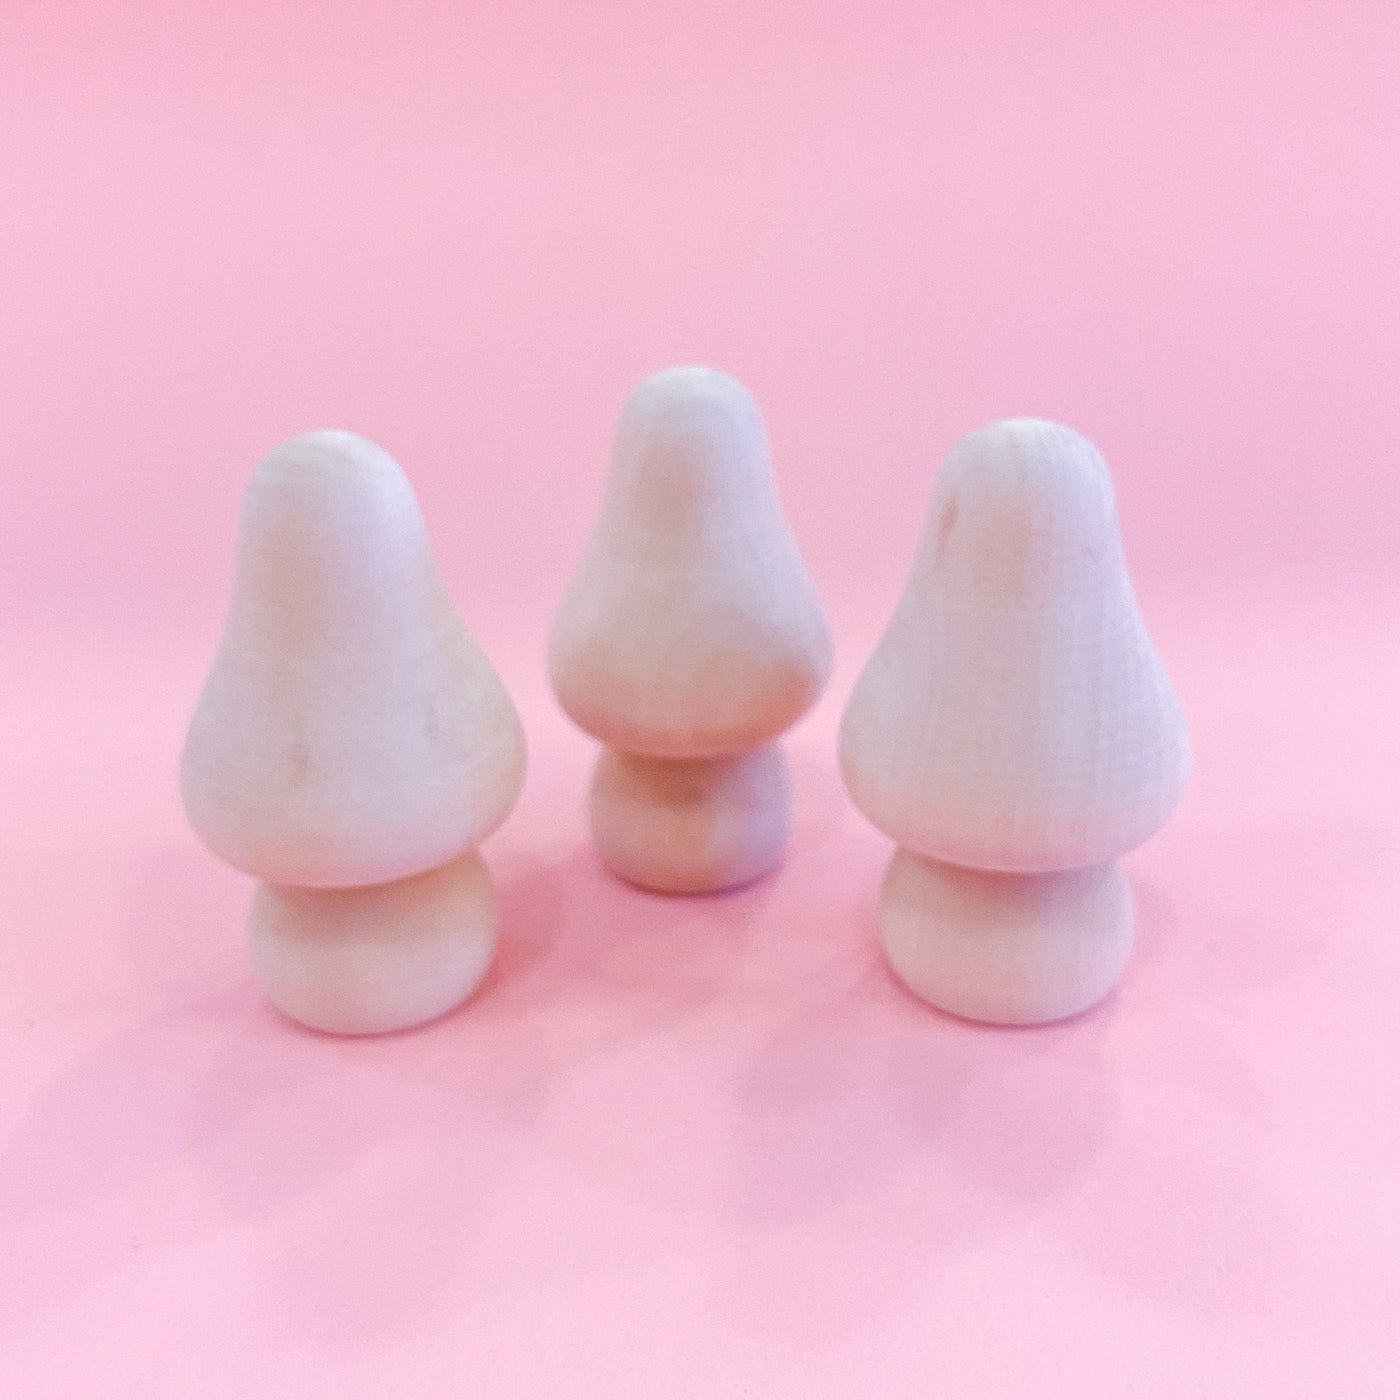 Wooden Mini Gnome Mushrooms – 2 x 1.2", 3 pieces